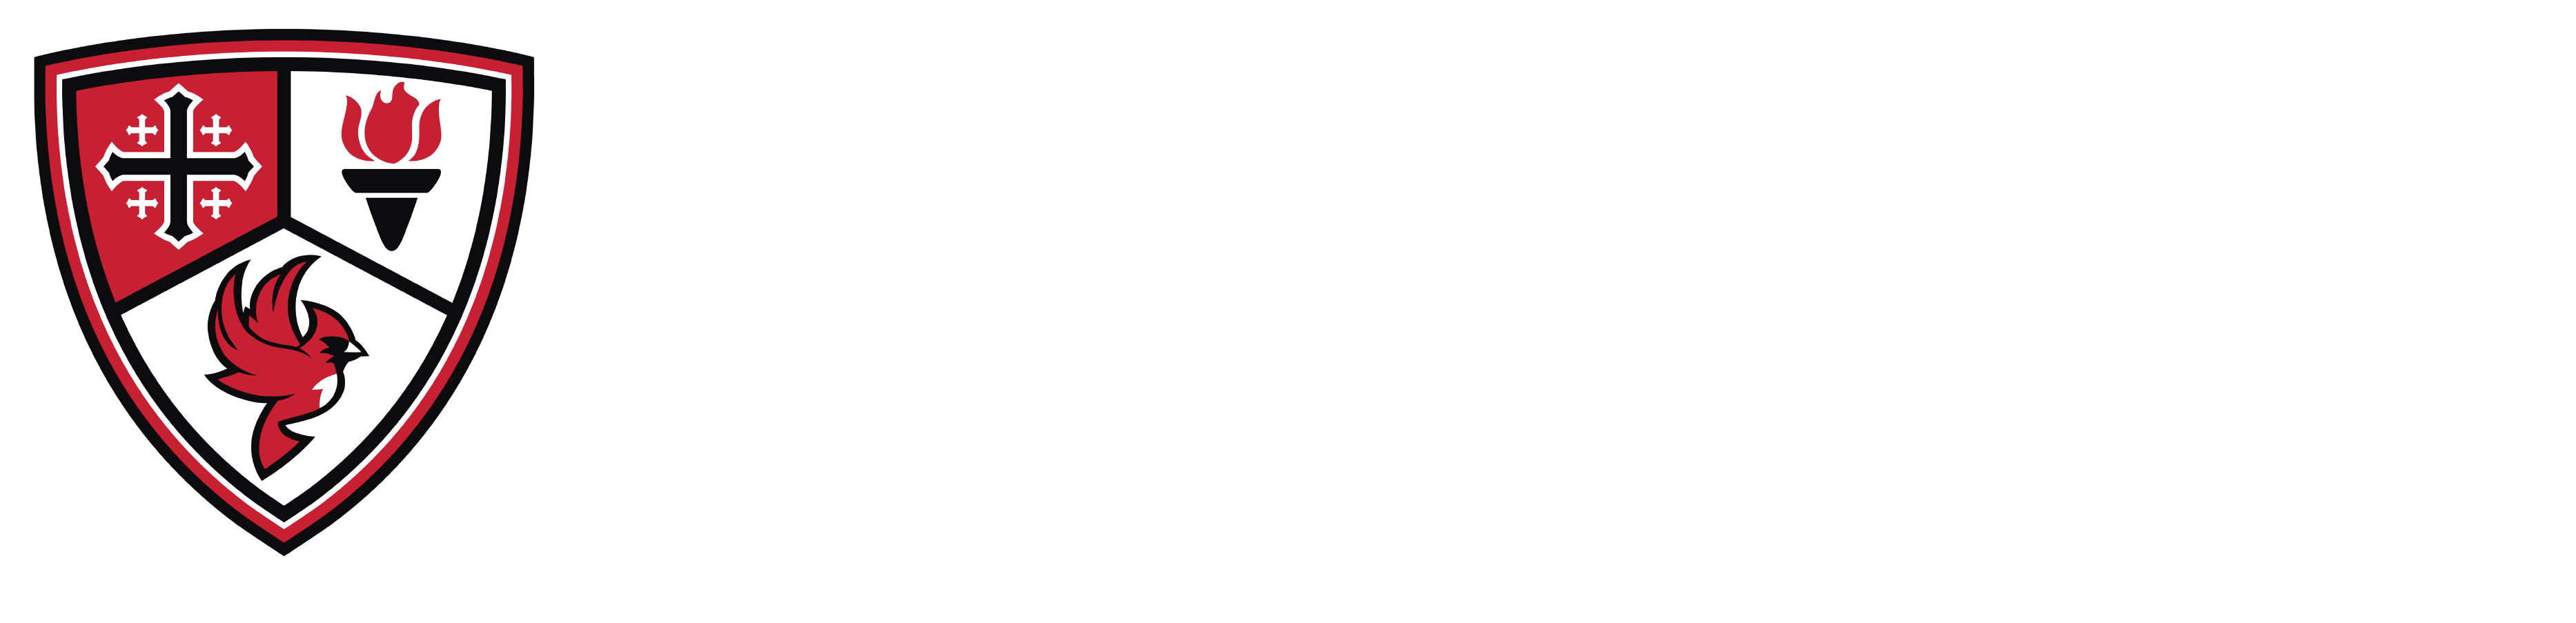 St. John's Episcopal School logo